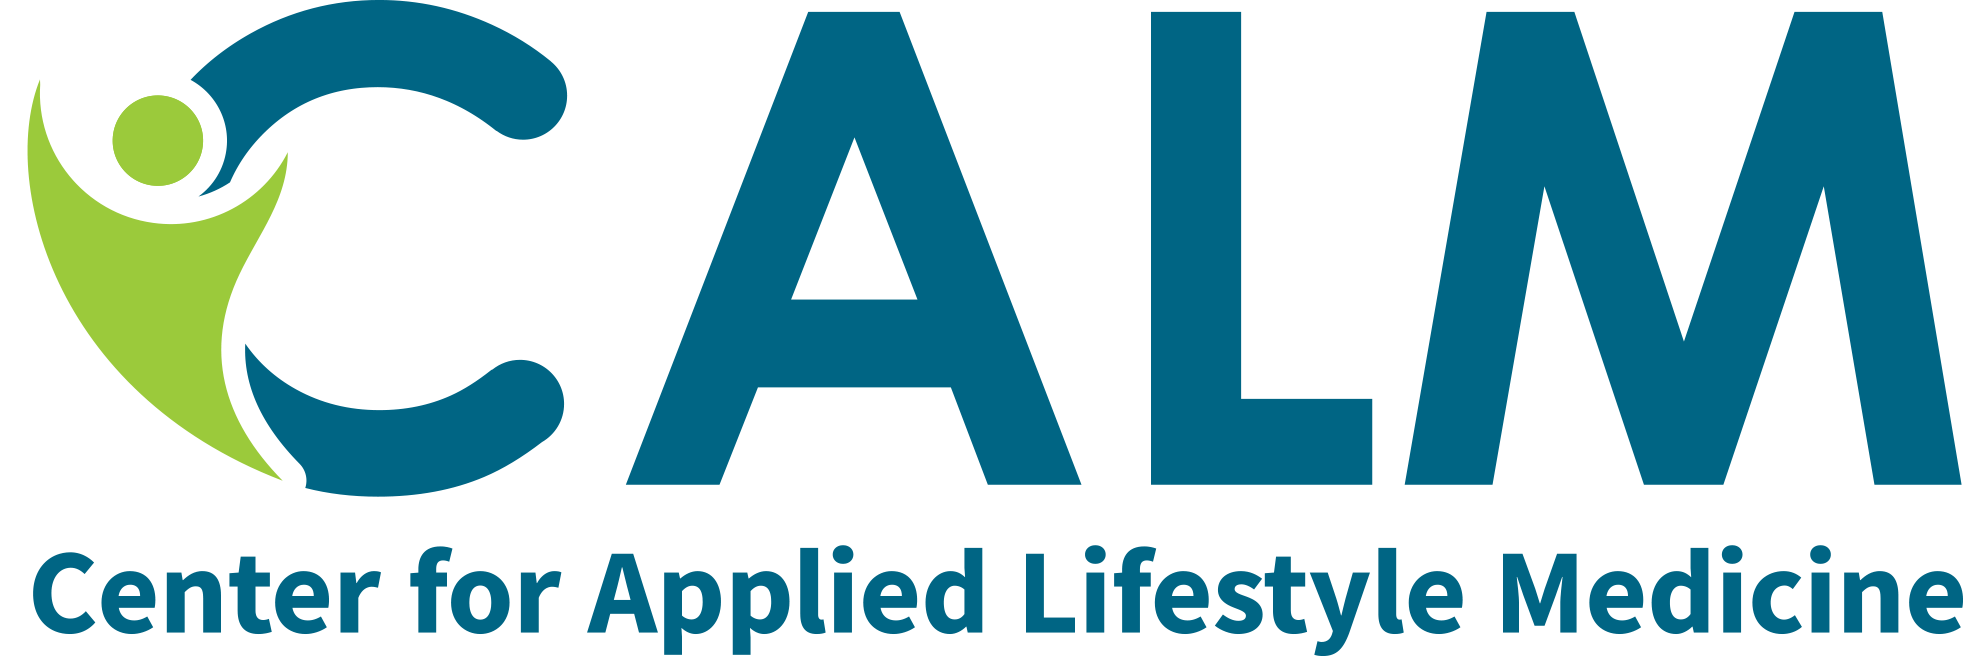 CALM: Center for Applied Lifestyle Medicine logo